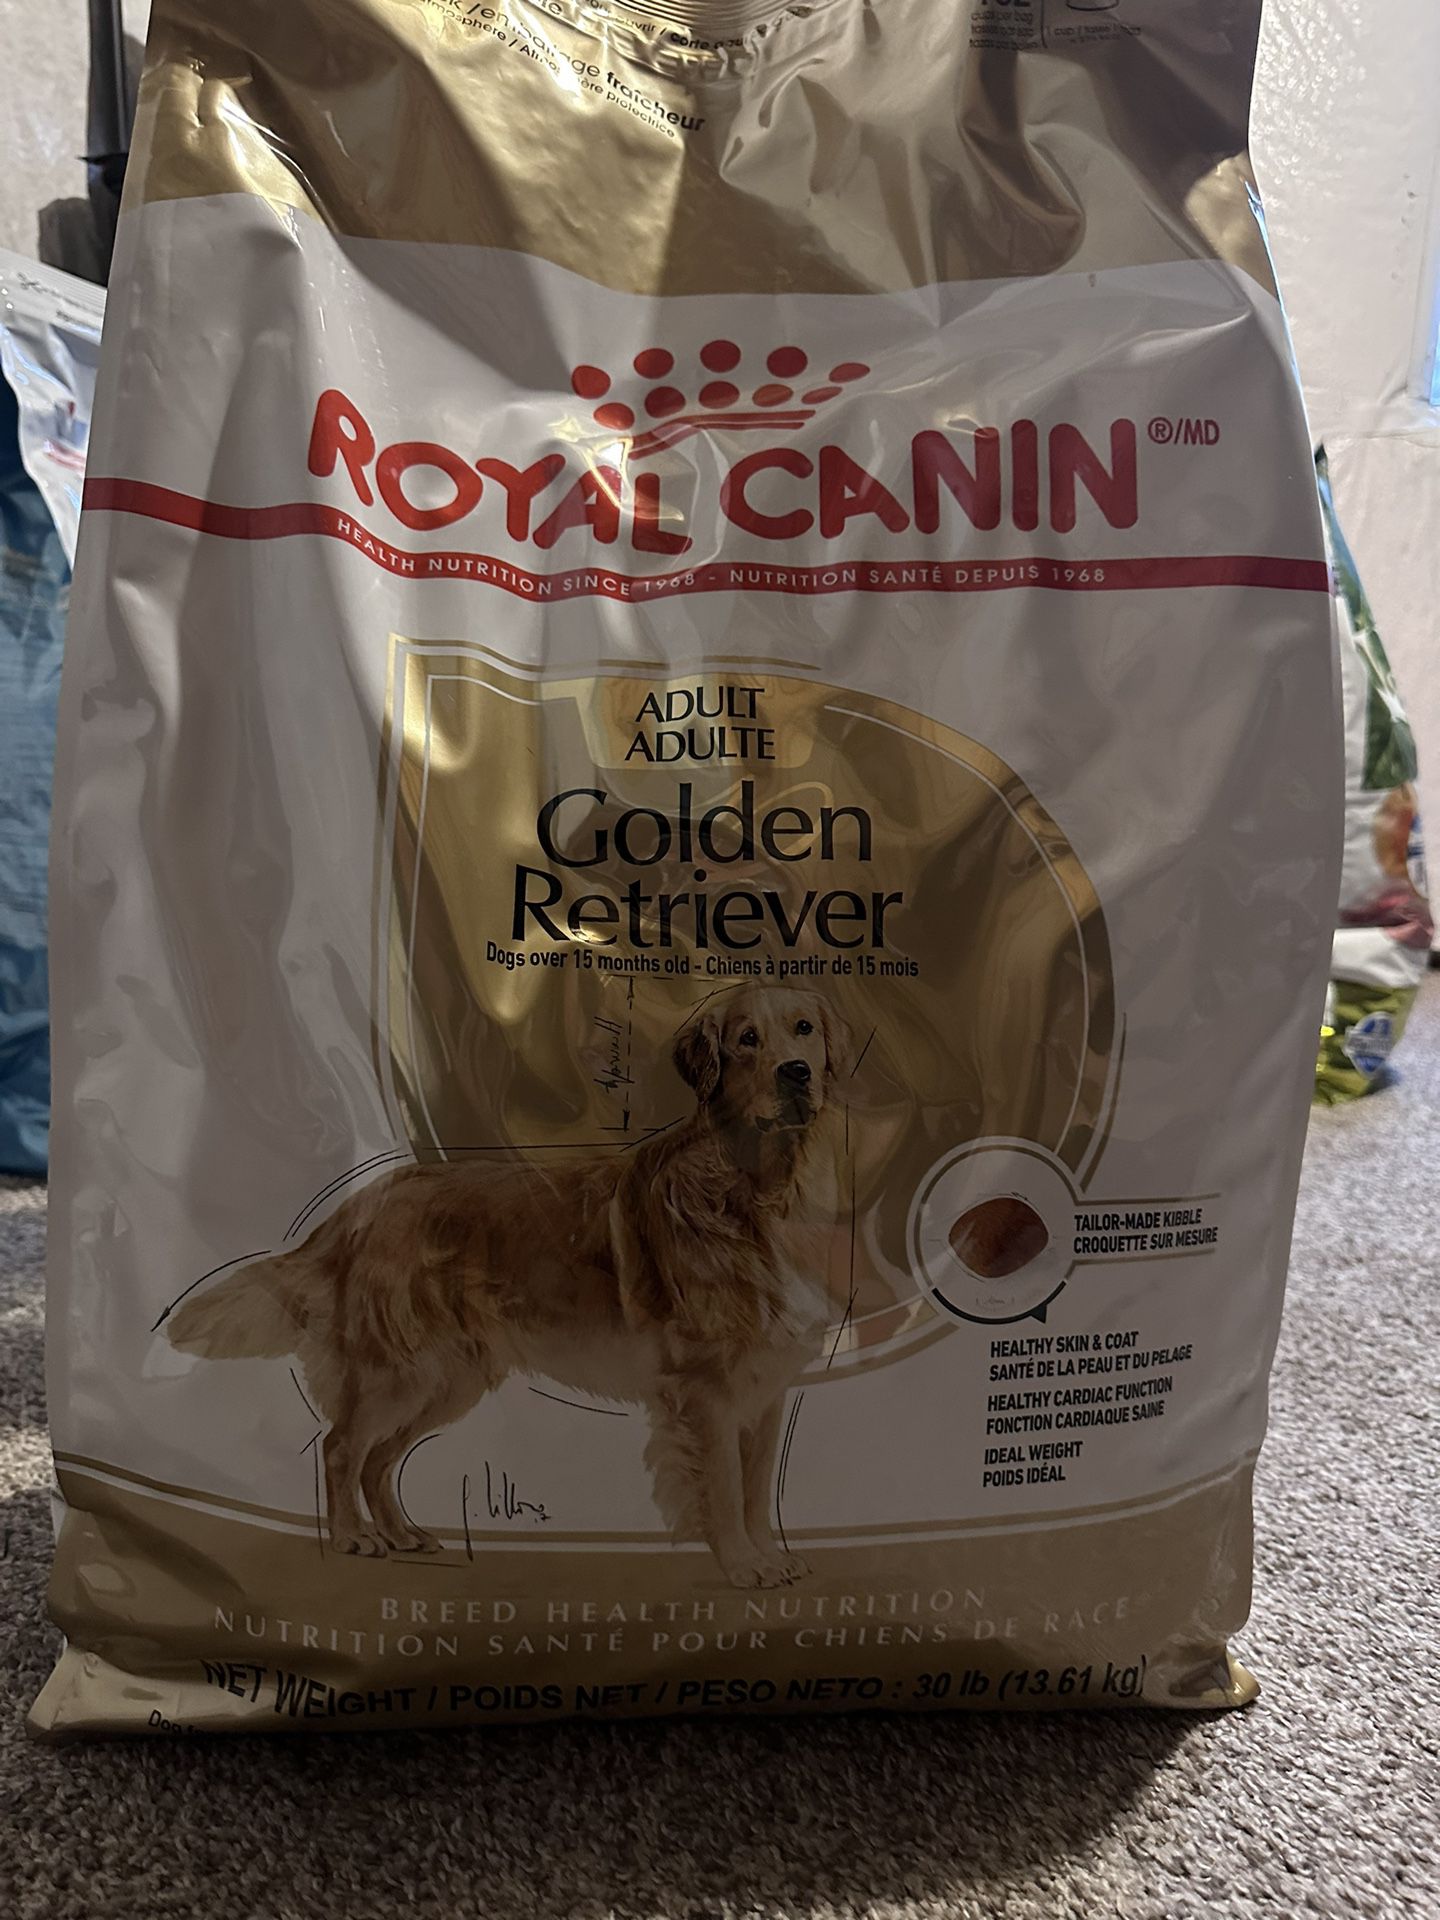 Royal Canin Dry Dog Food